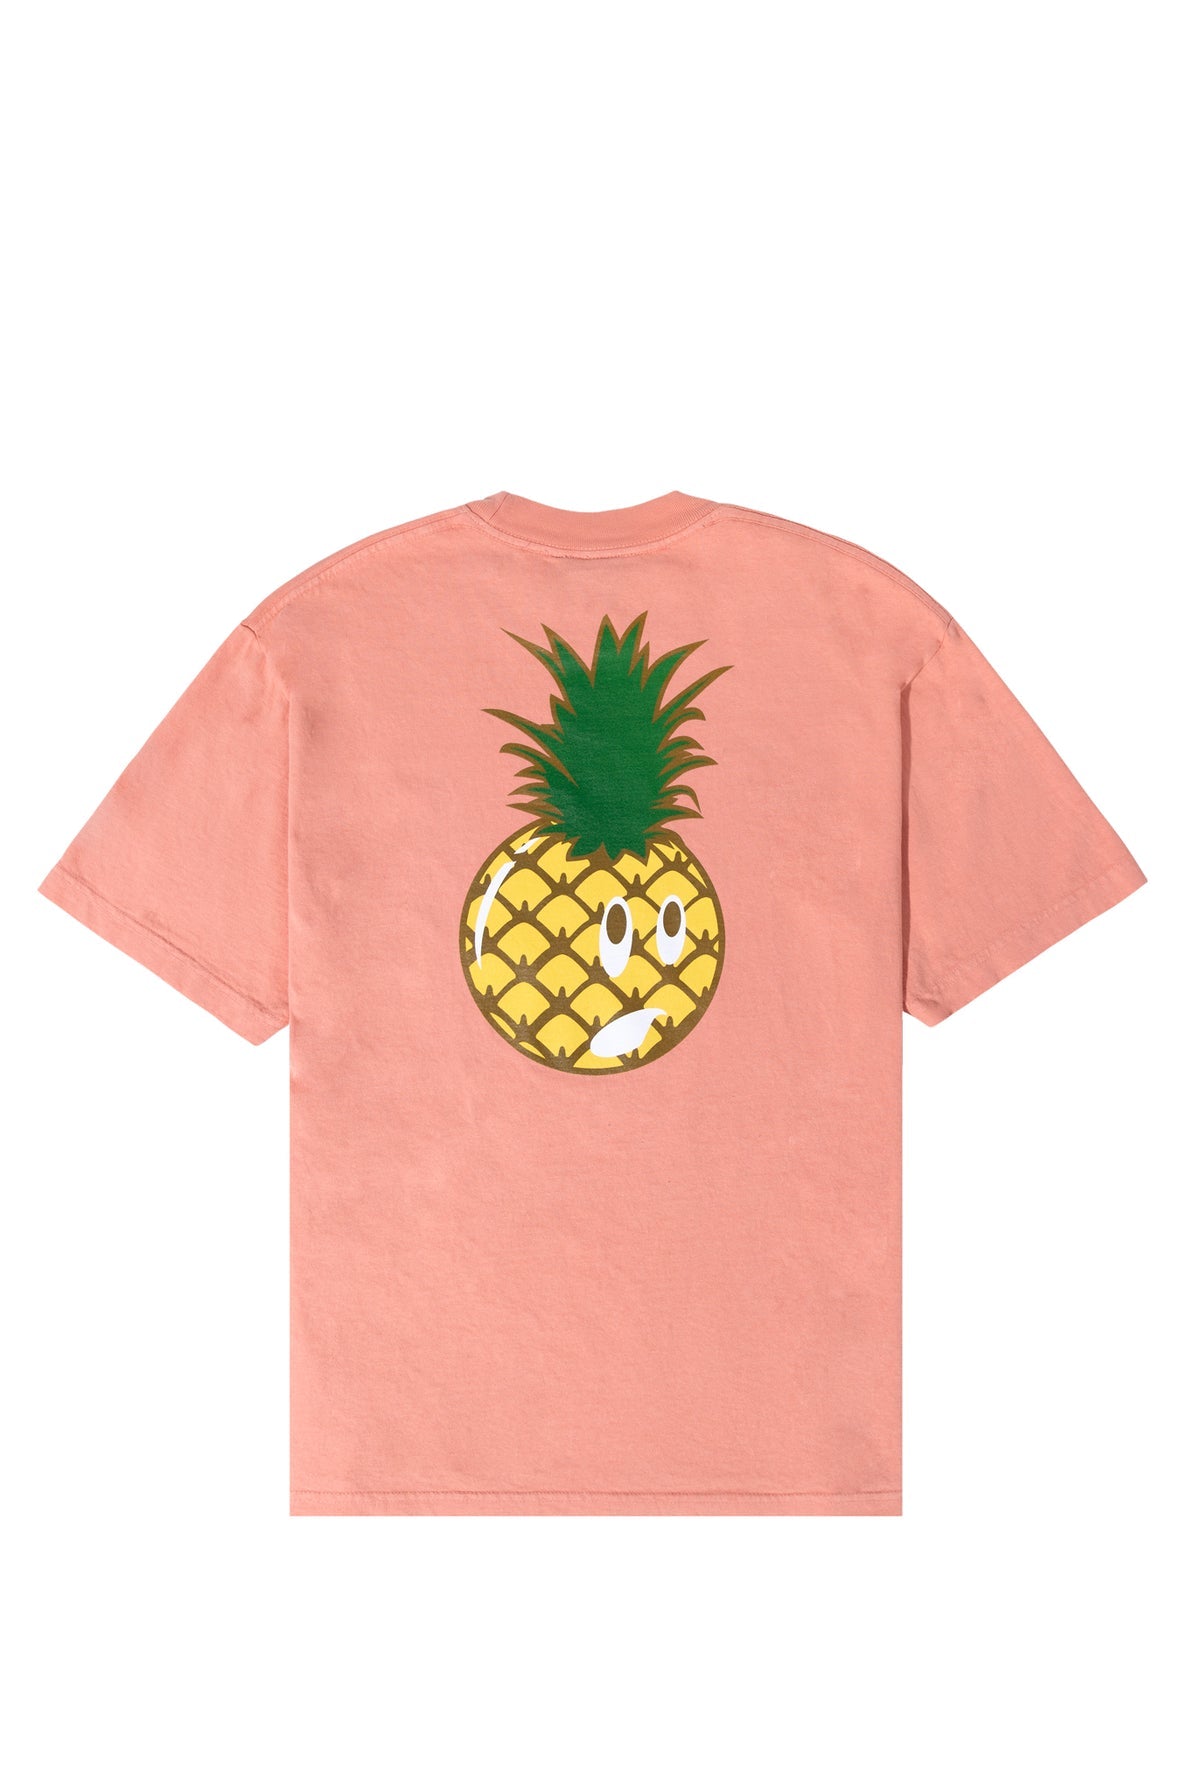 The Hundreds pineapple adam tee